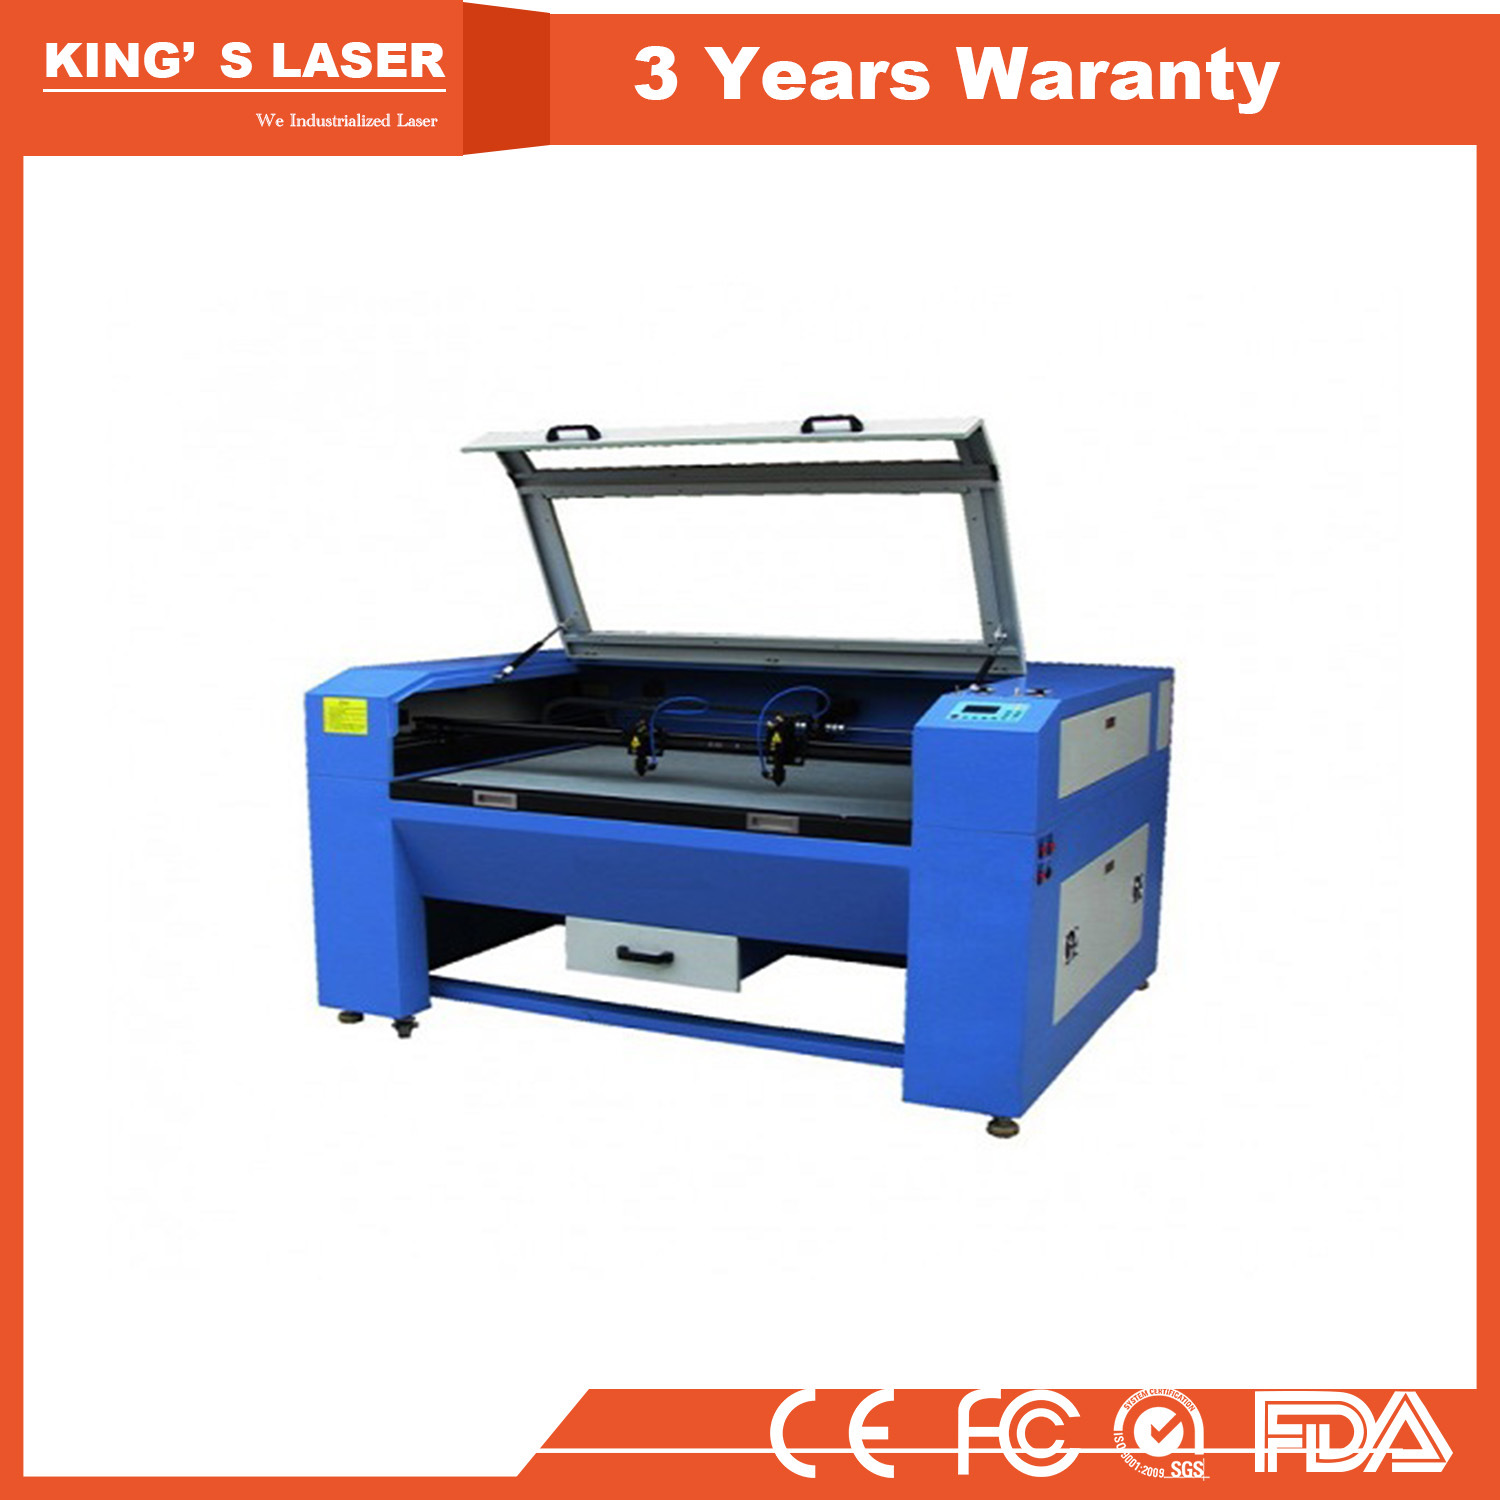 100W Acrylic CNC Cutting Engraving Machine CO2 Laser Cutter Engraver